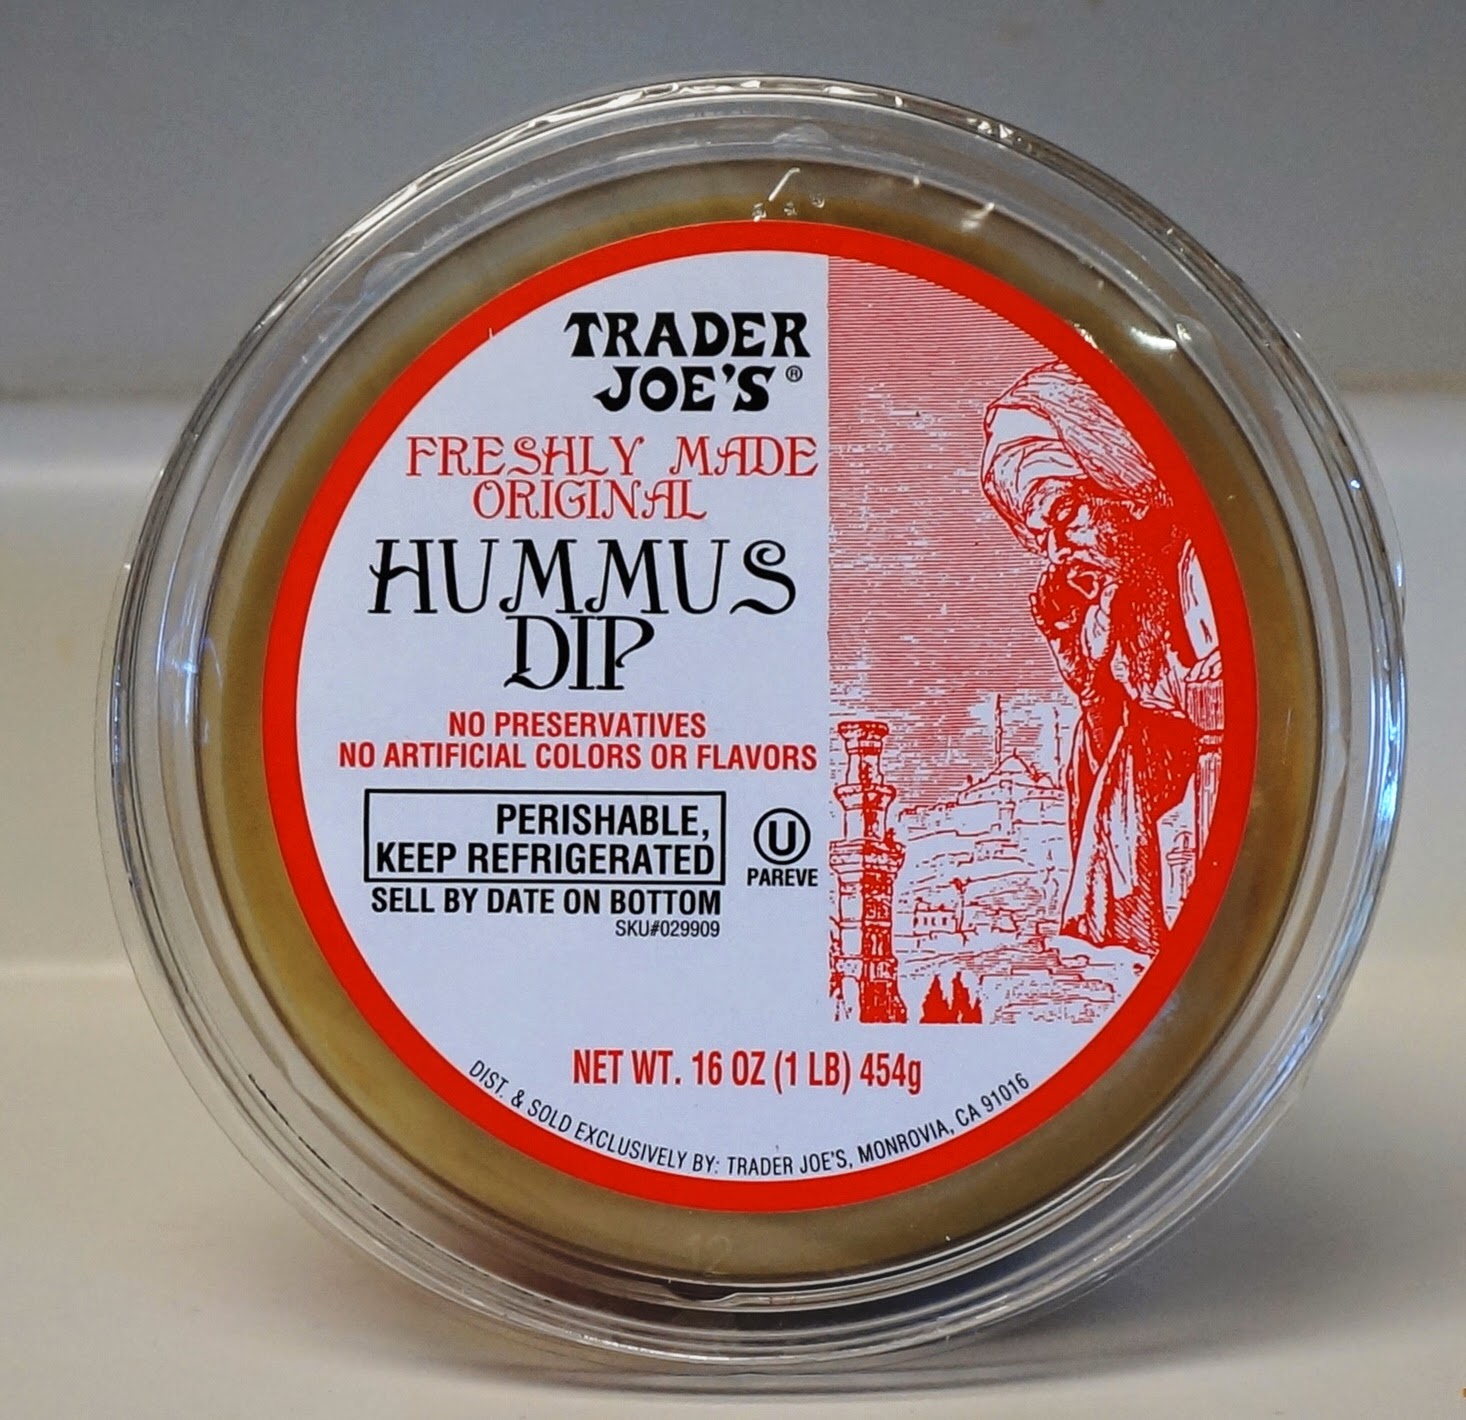 Exploring Trader Joe's Trader Joe's Freshly Made Original Hummus Dip